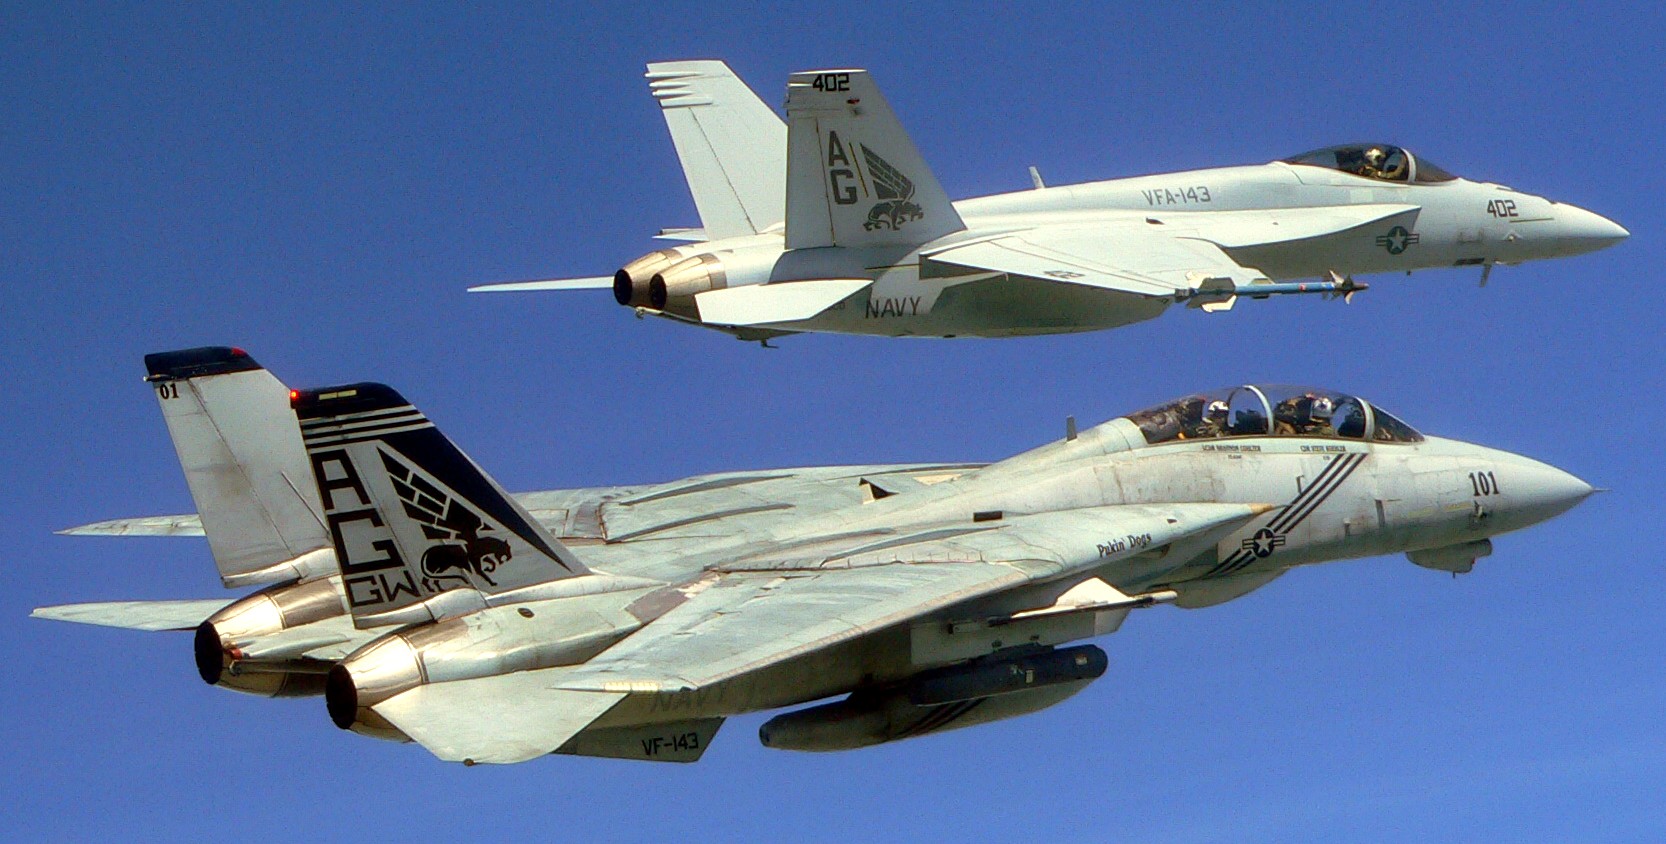 vfa-143 pukin dogs strike fighter squadron f/a-18e super hornet f-14b tomcat vf-143 key west florida 2005 74